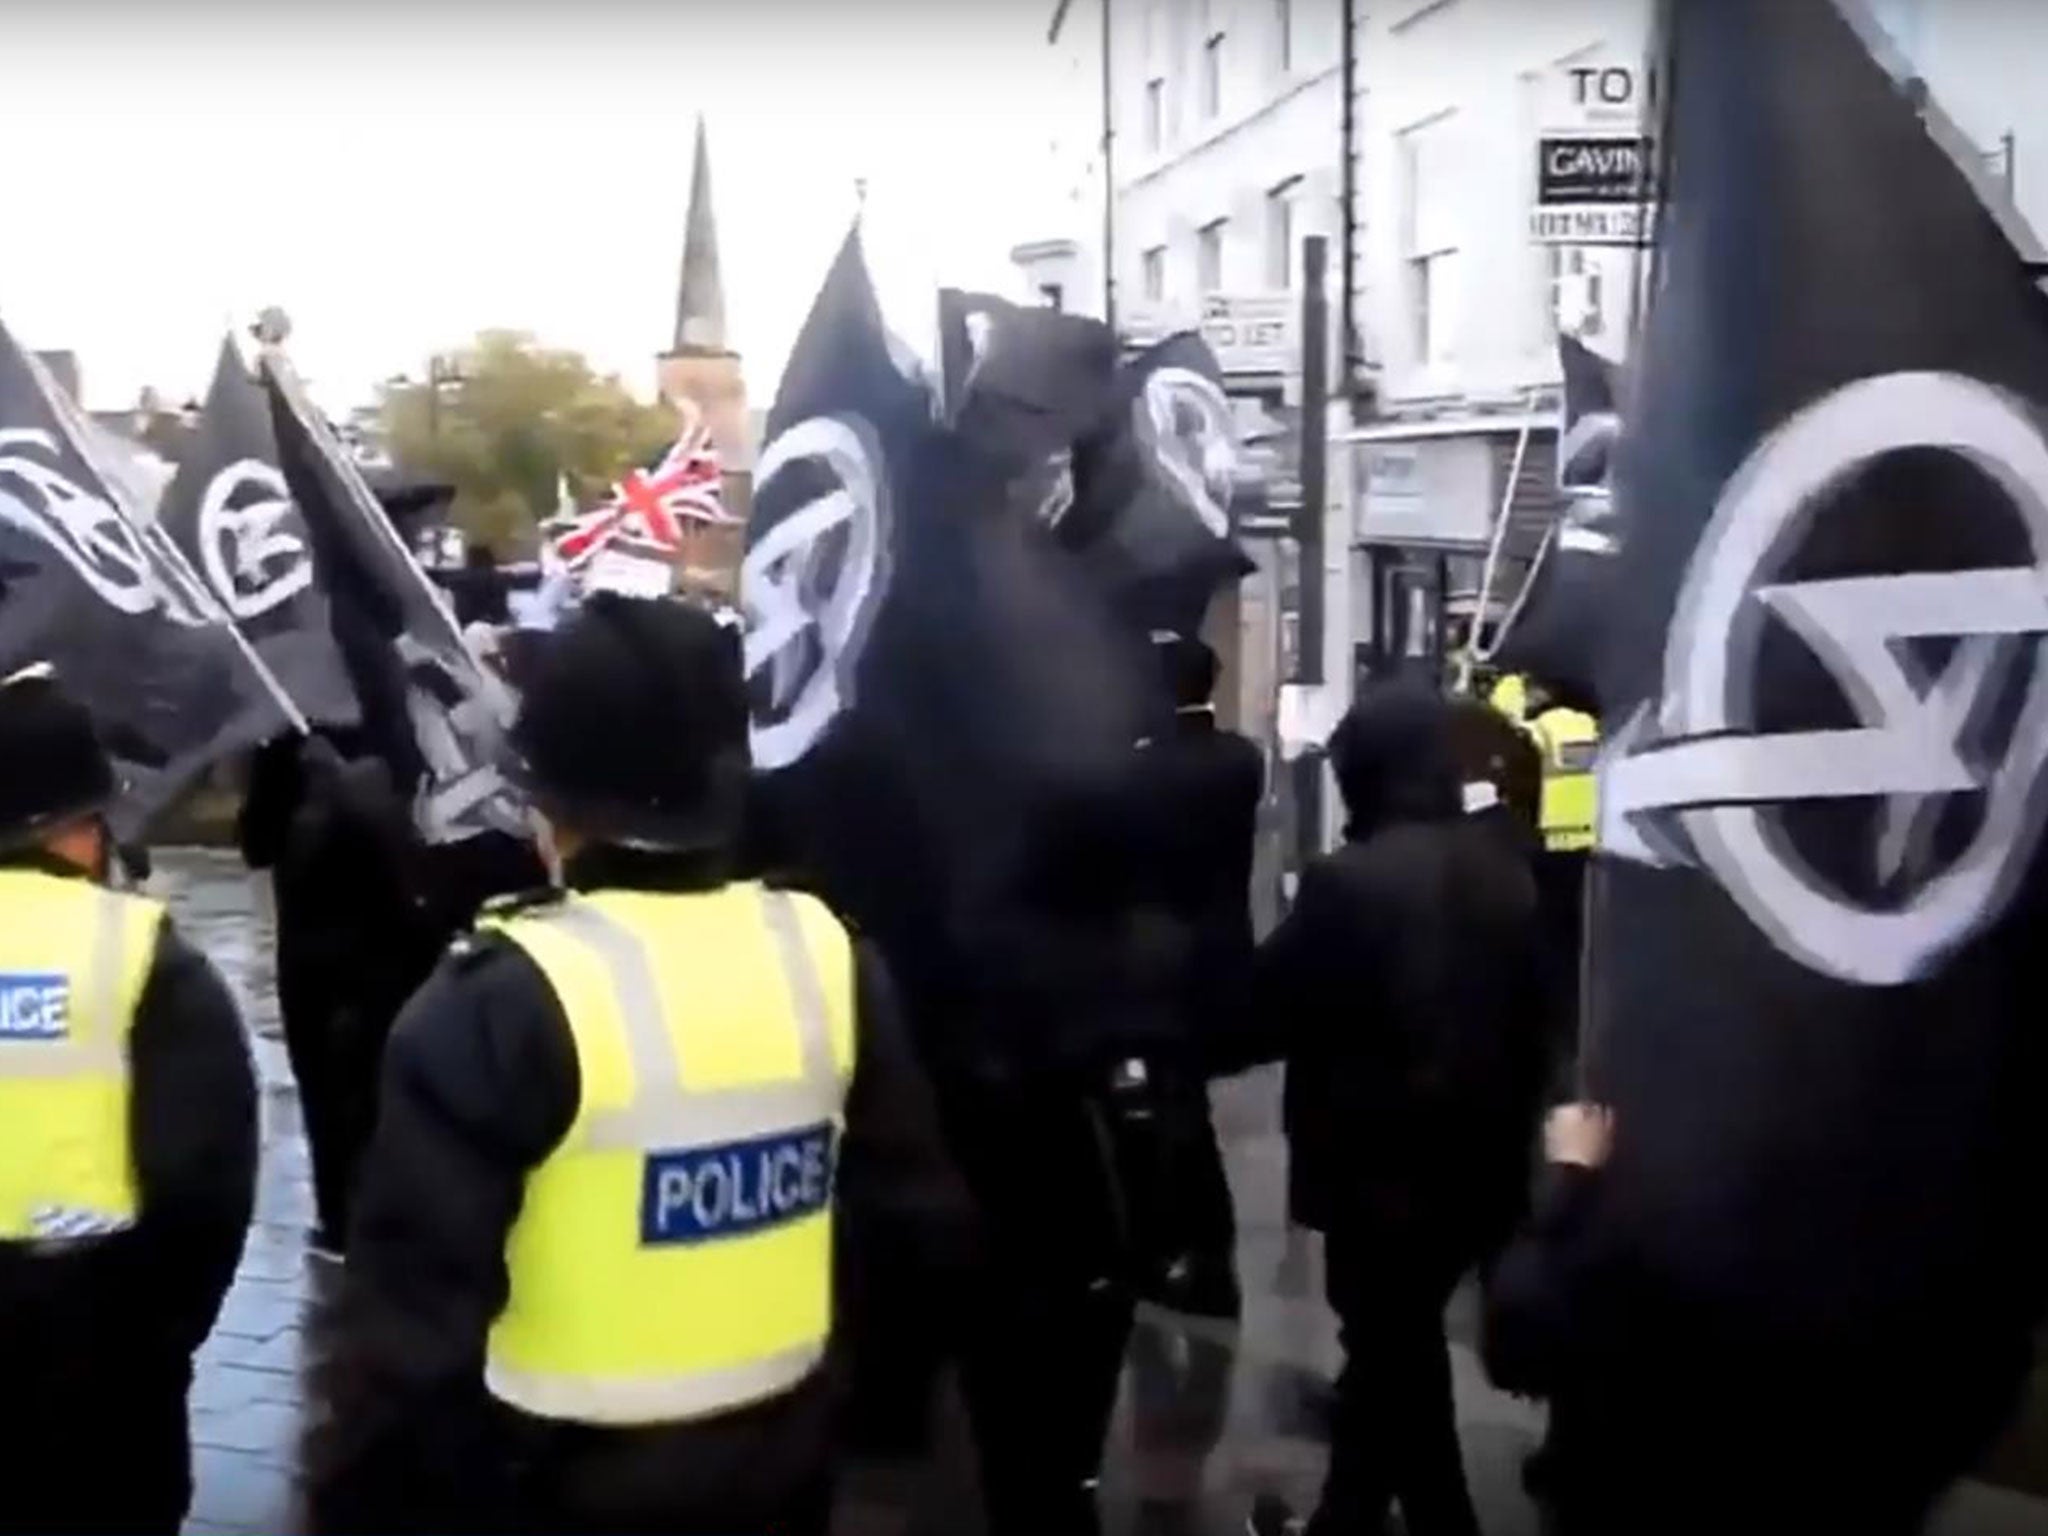 Neo-Nazis convicted after spreading racist stickers around Birmingham university